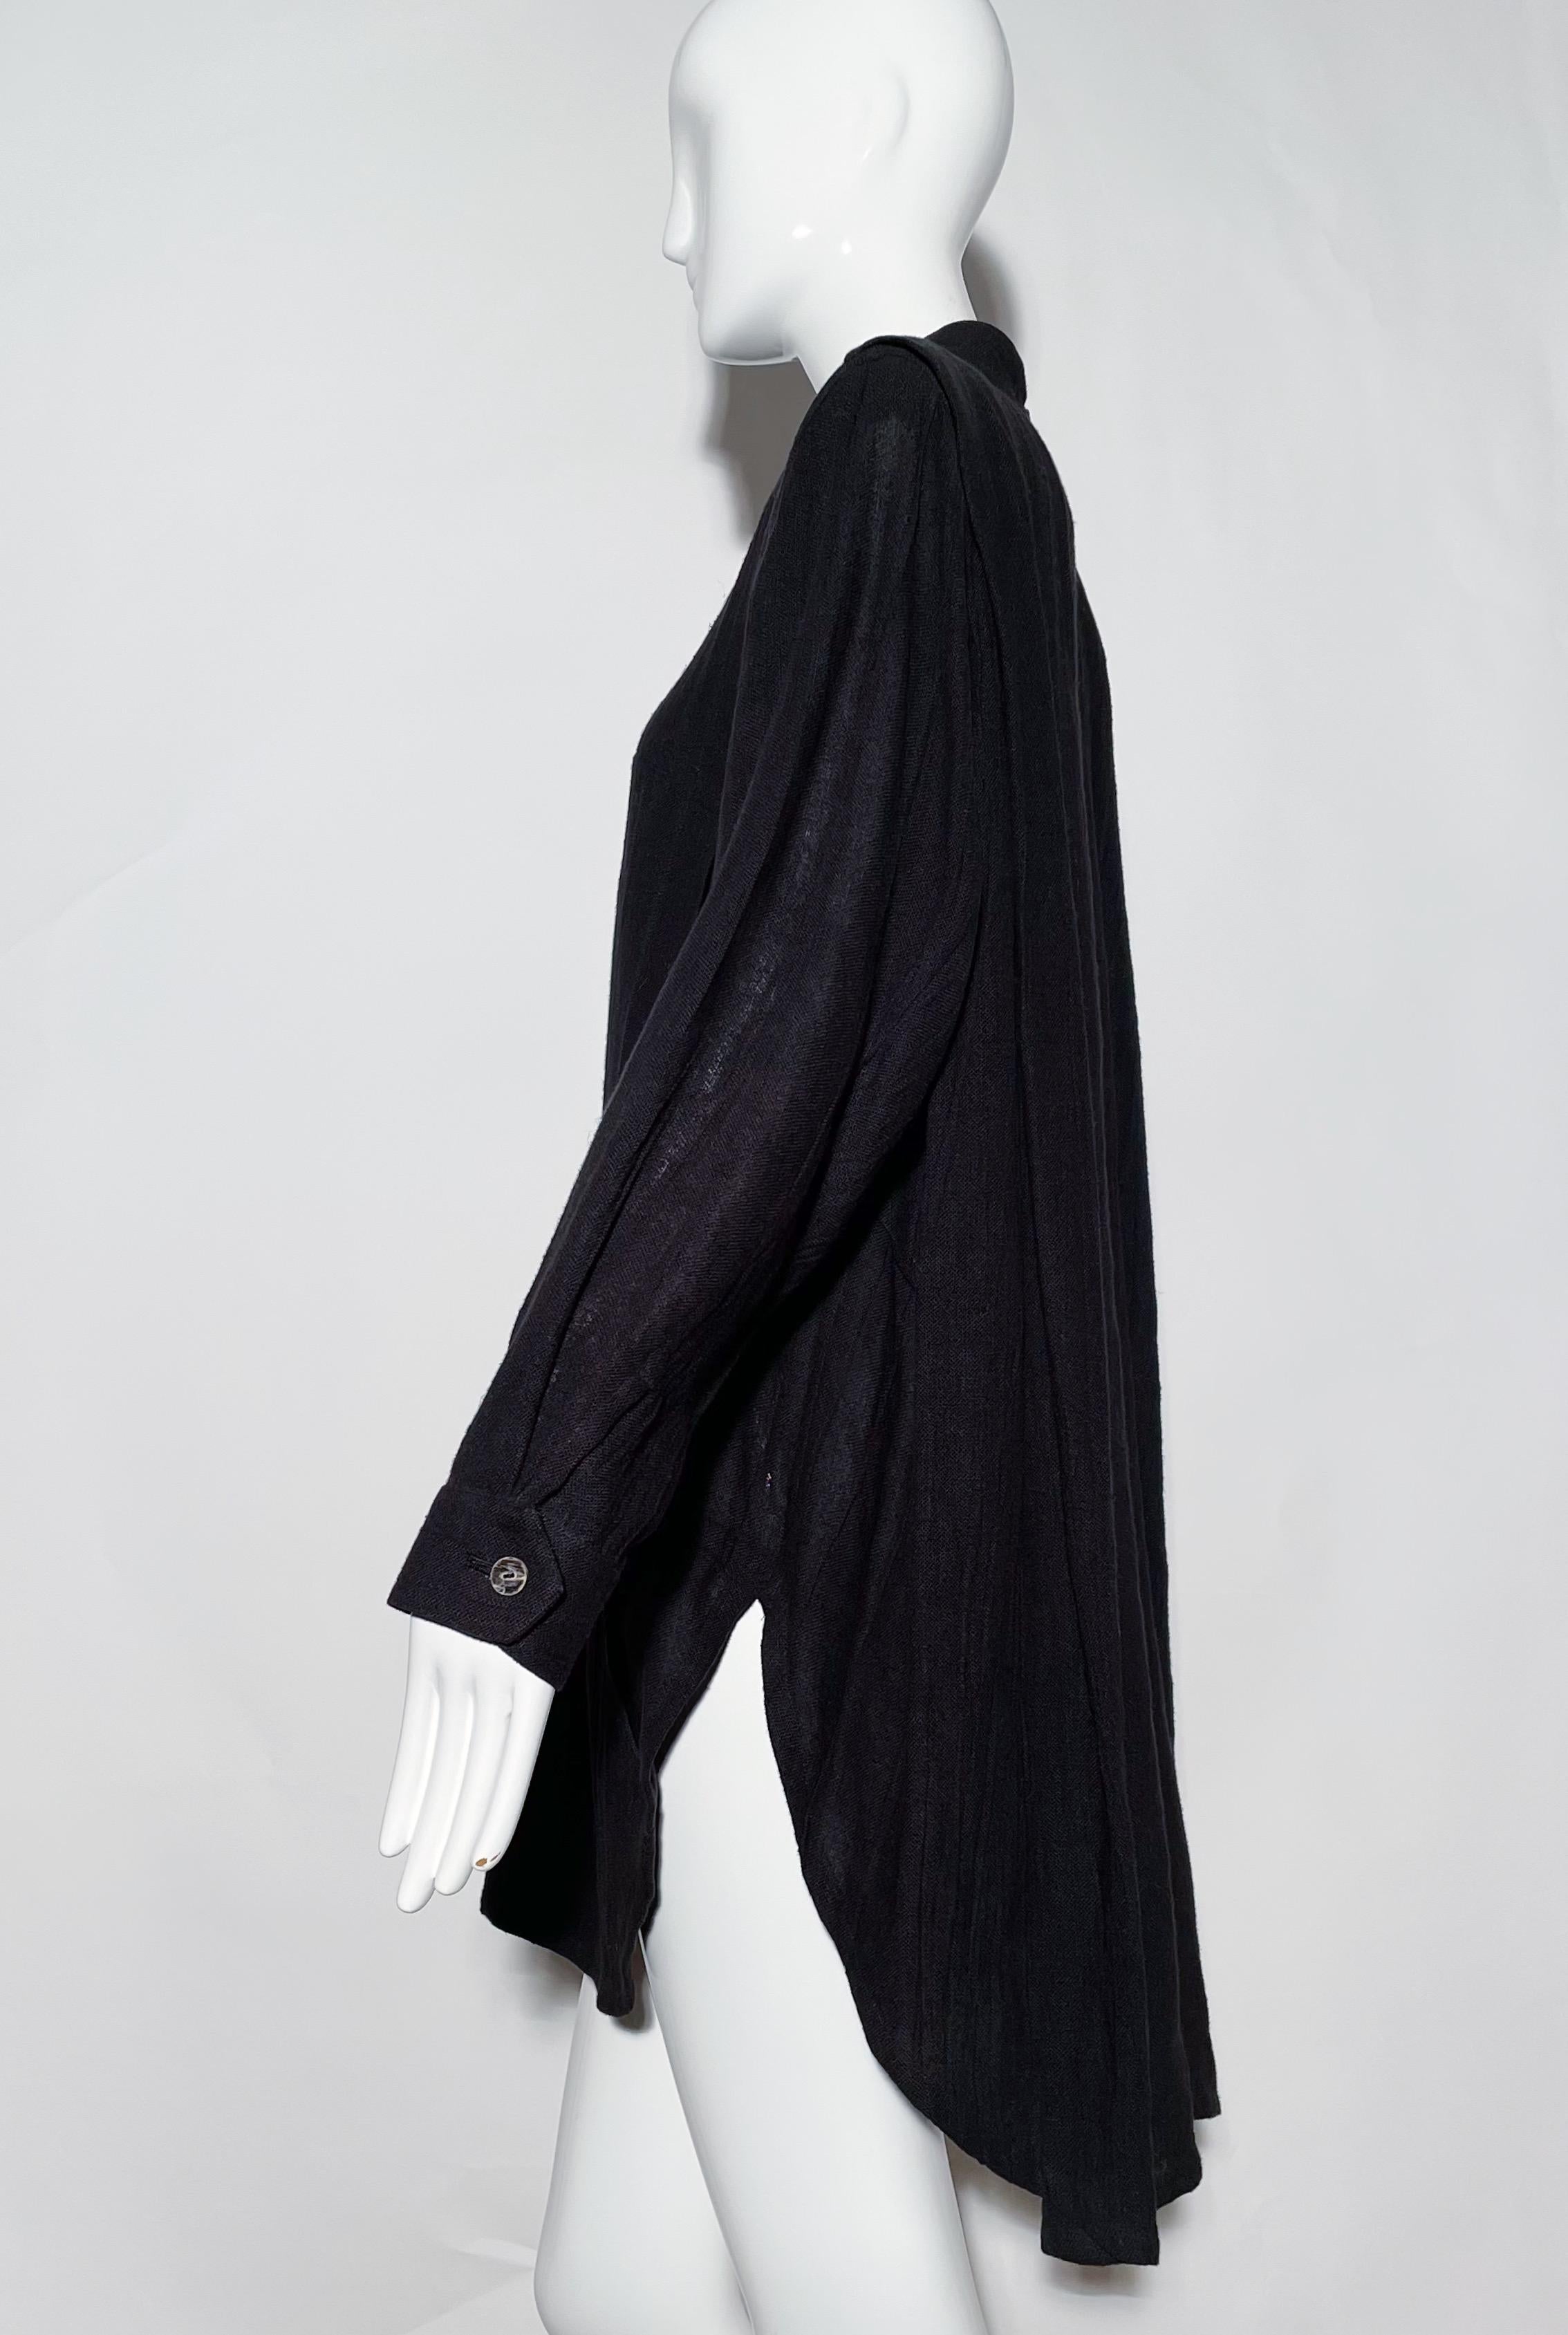 Issey Miyake Black Dress Tunic For Sale 1